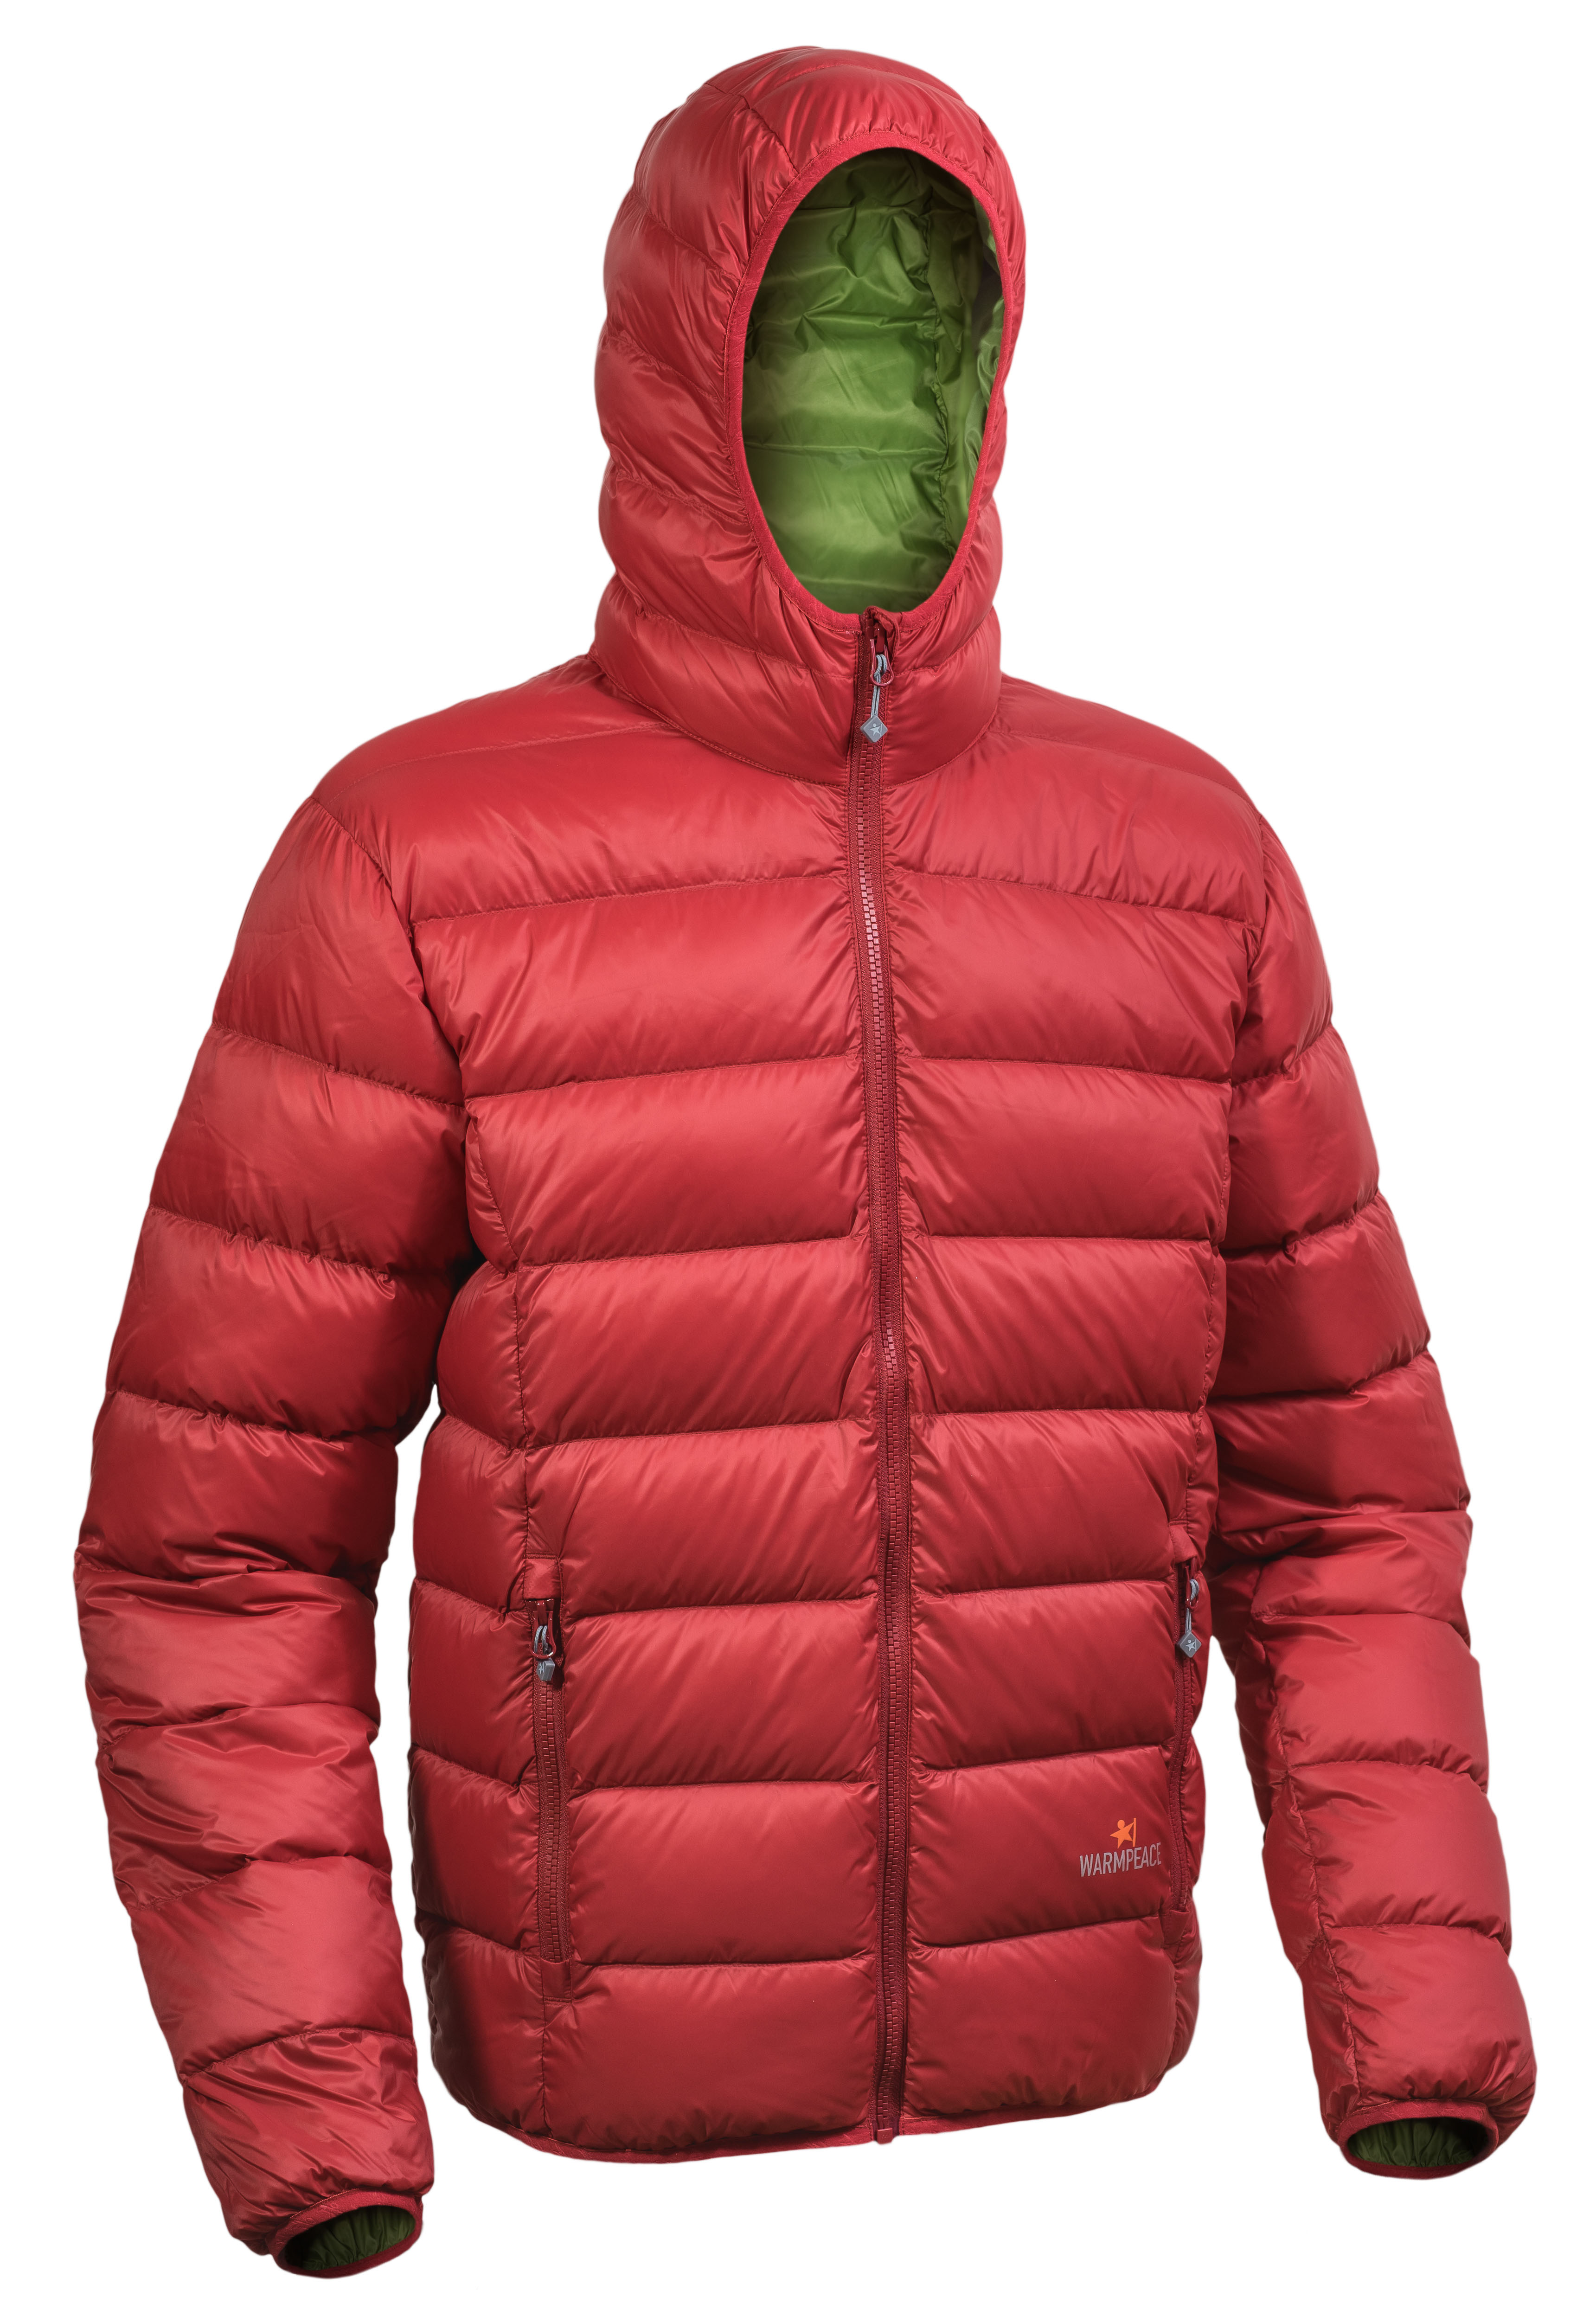 Warmpeace péřová bunda Vernon Barva: mars red/olive green, Velikost: XXL